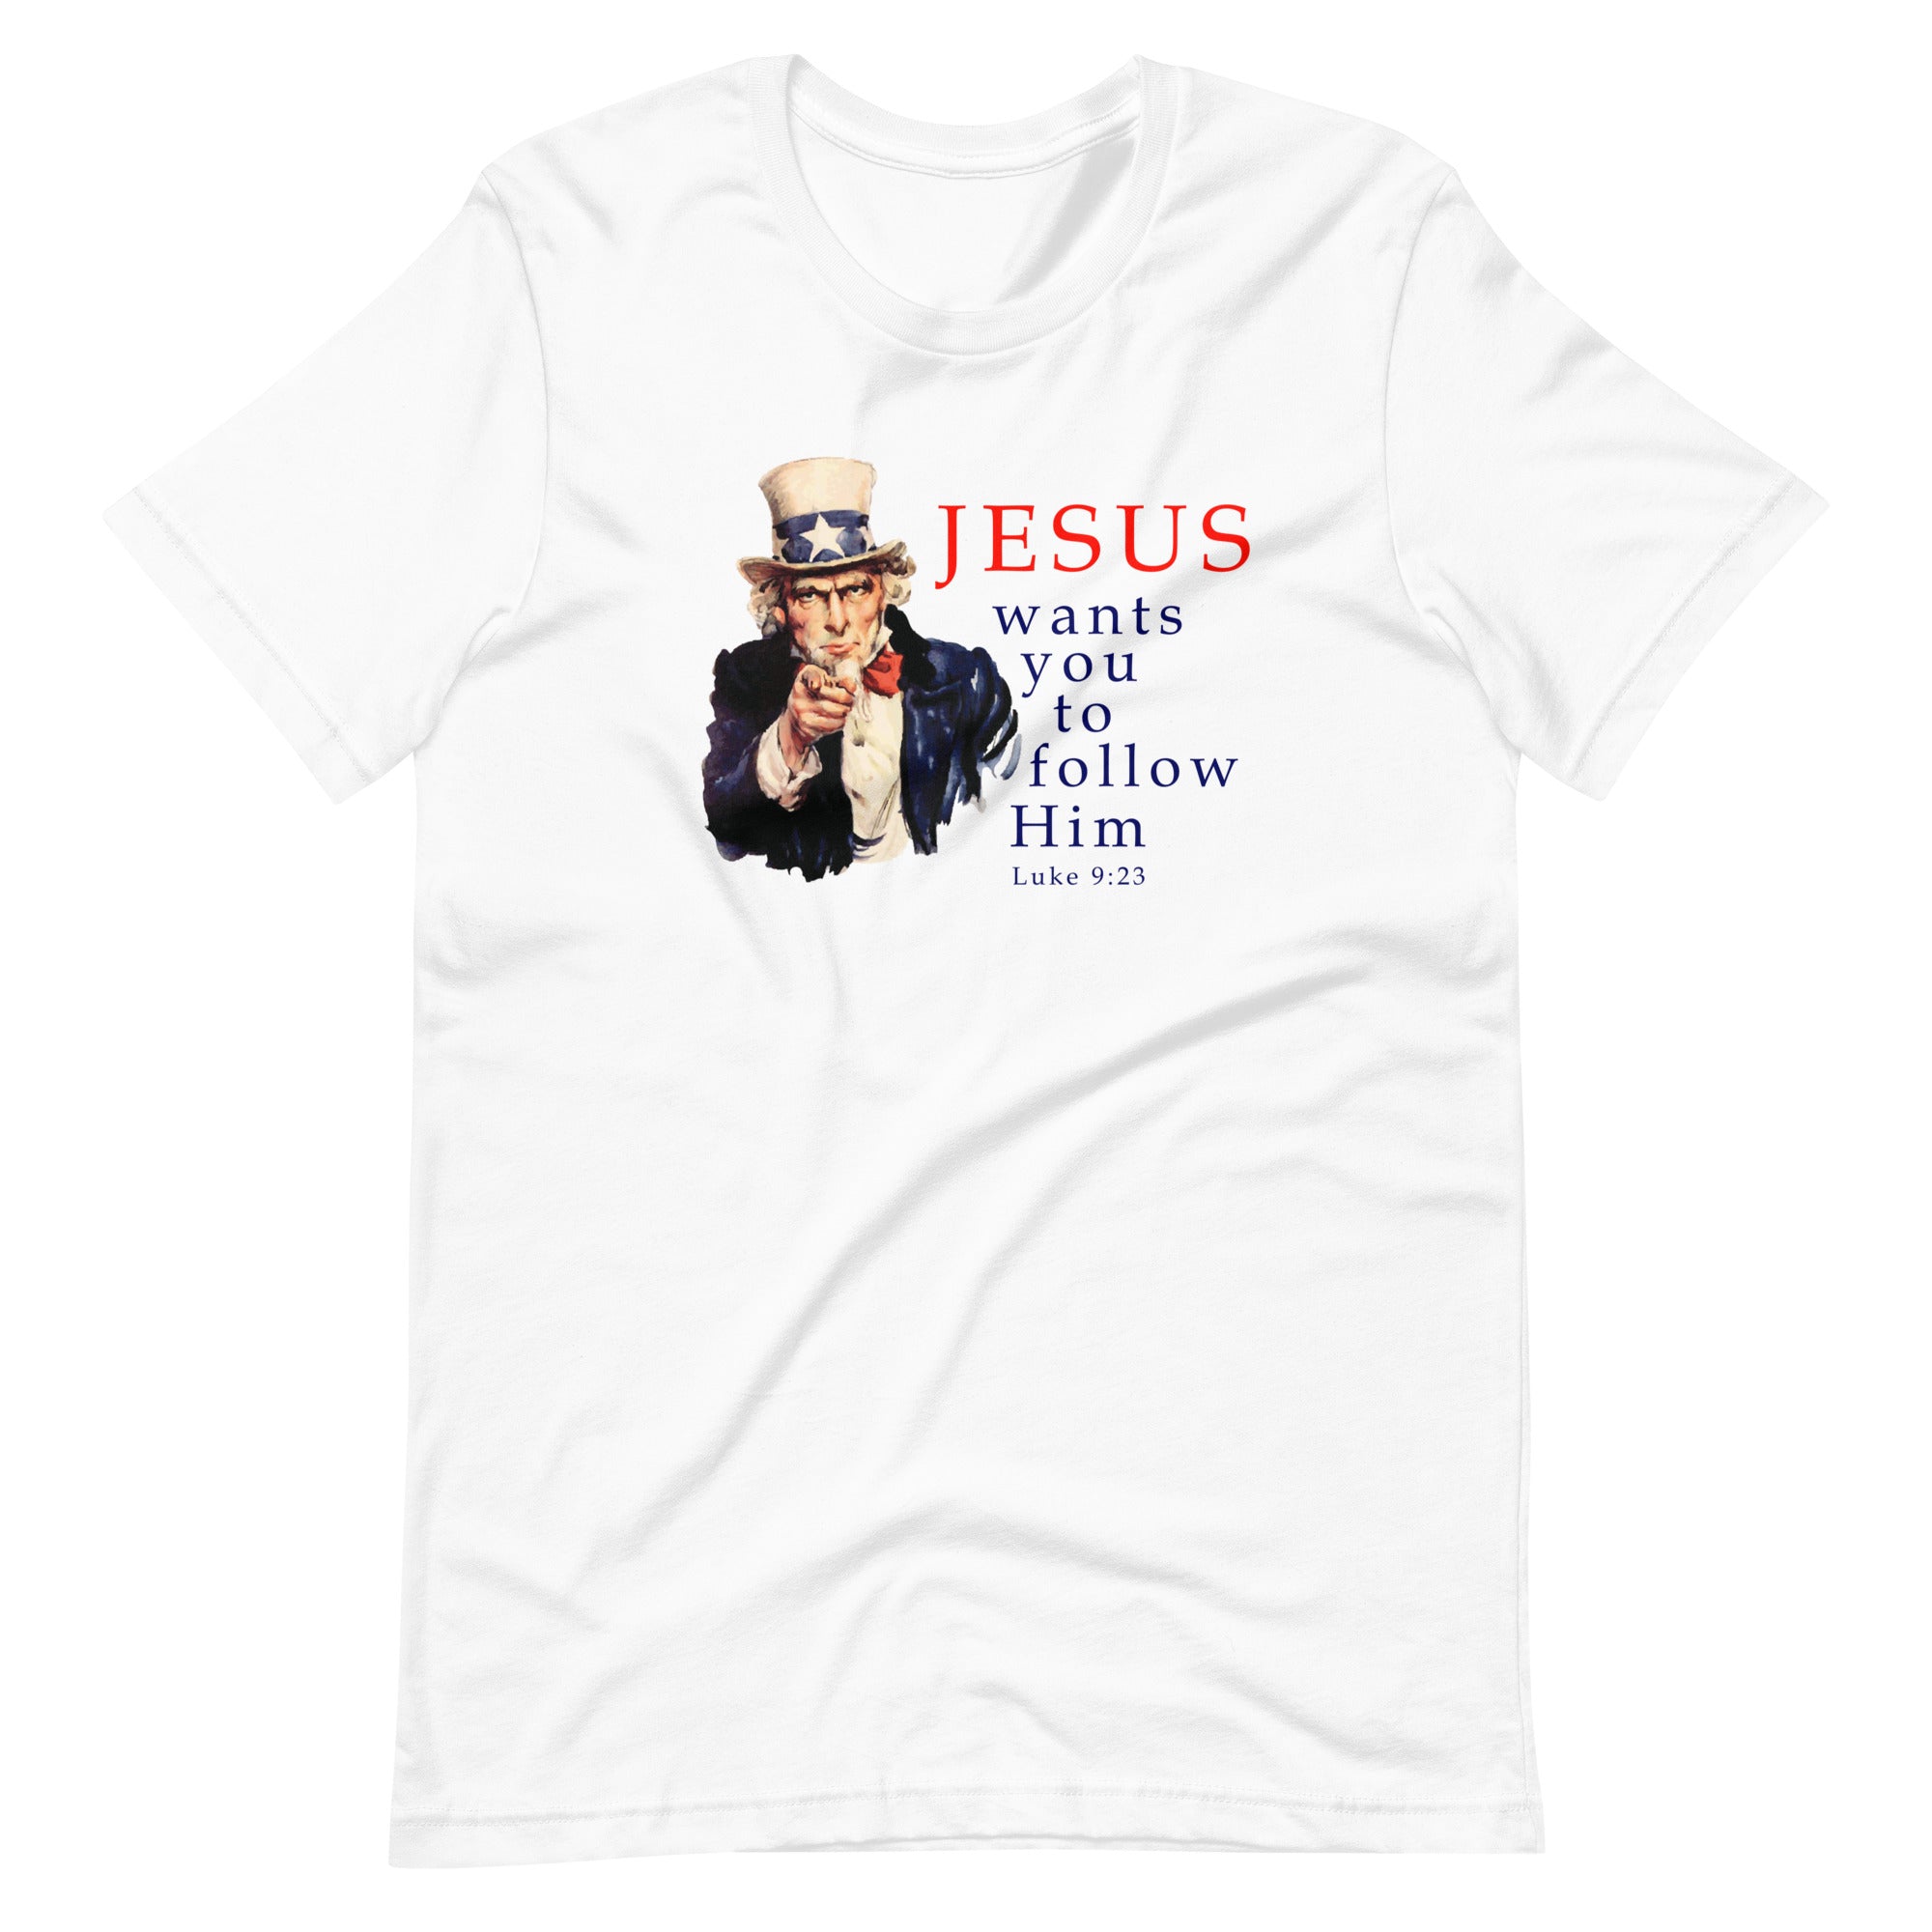 Jesus wants you to follow Him Tee